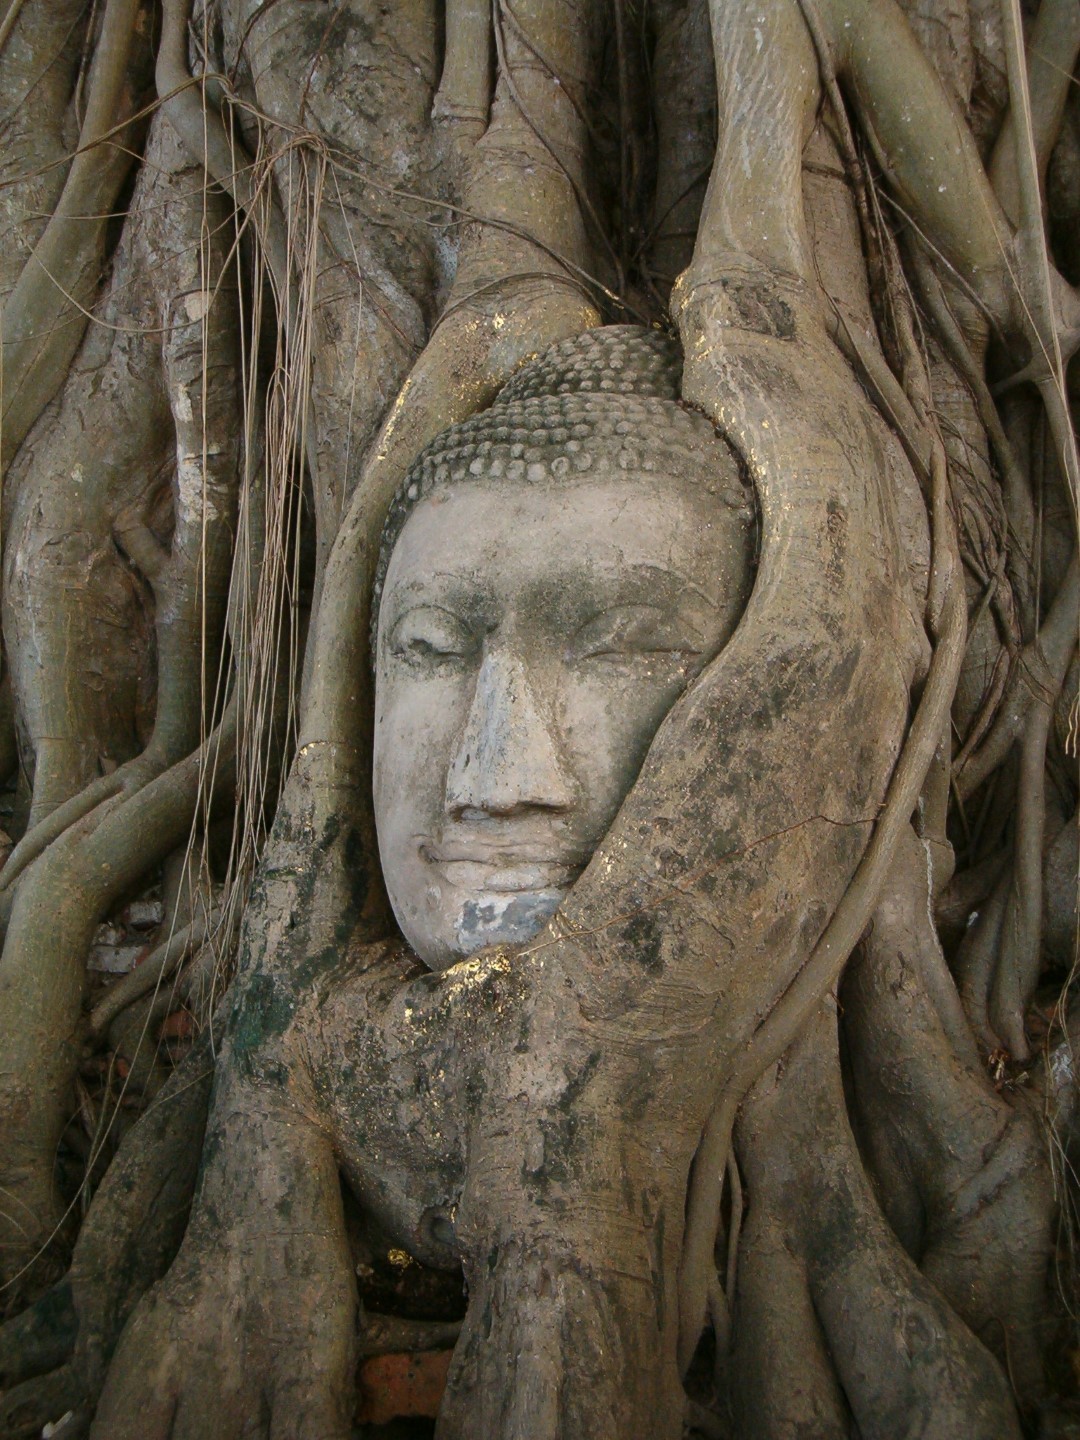 Buddha head embedded in a Banyan tree